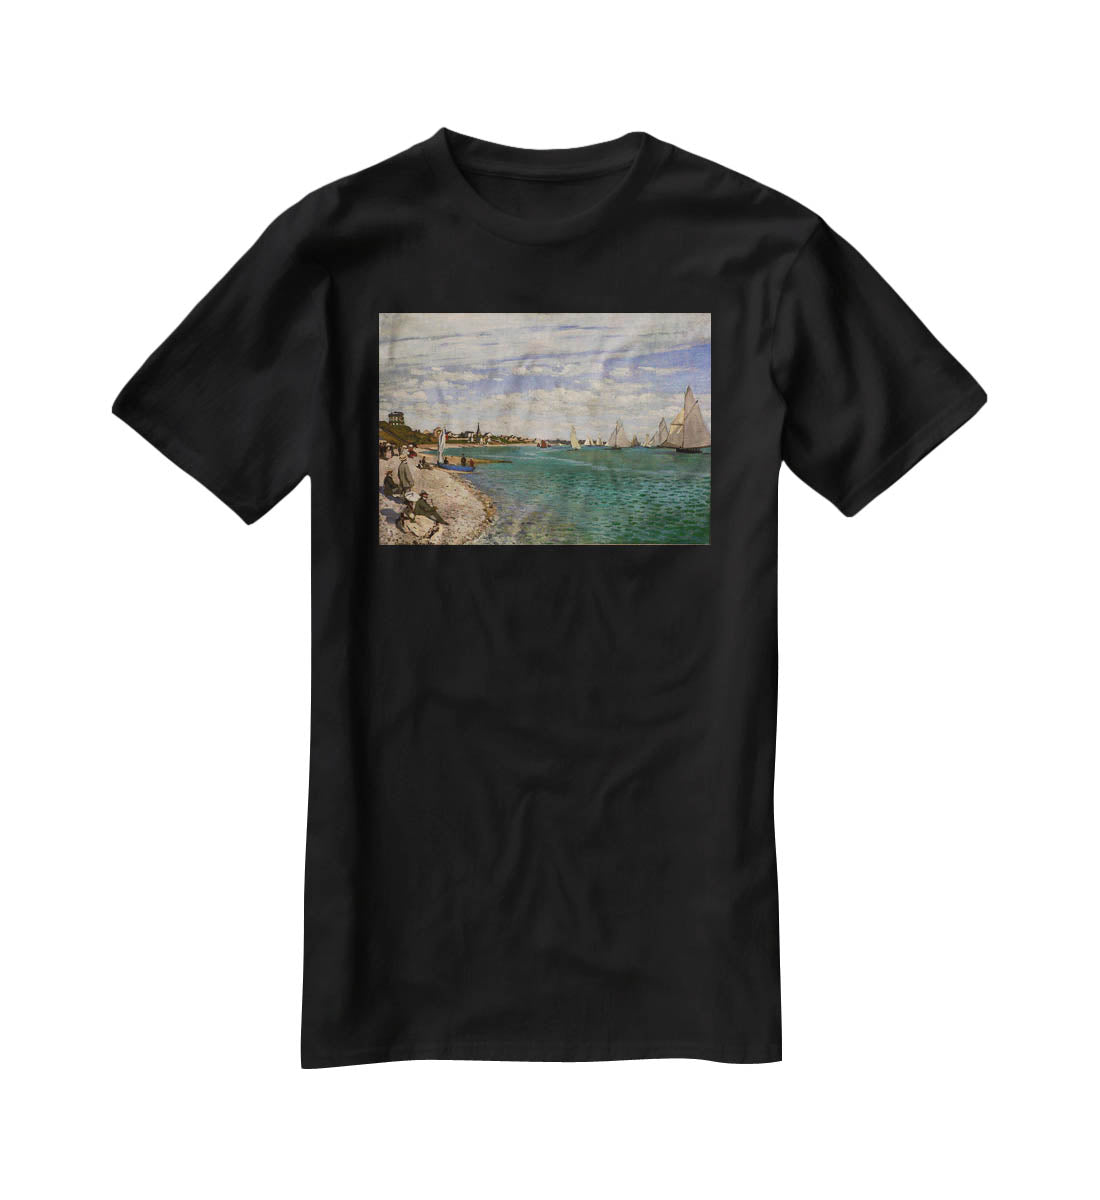 Regatta at St. Adresse by Monet T-Shirt - Canvas Art Rocks - 1